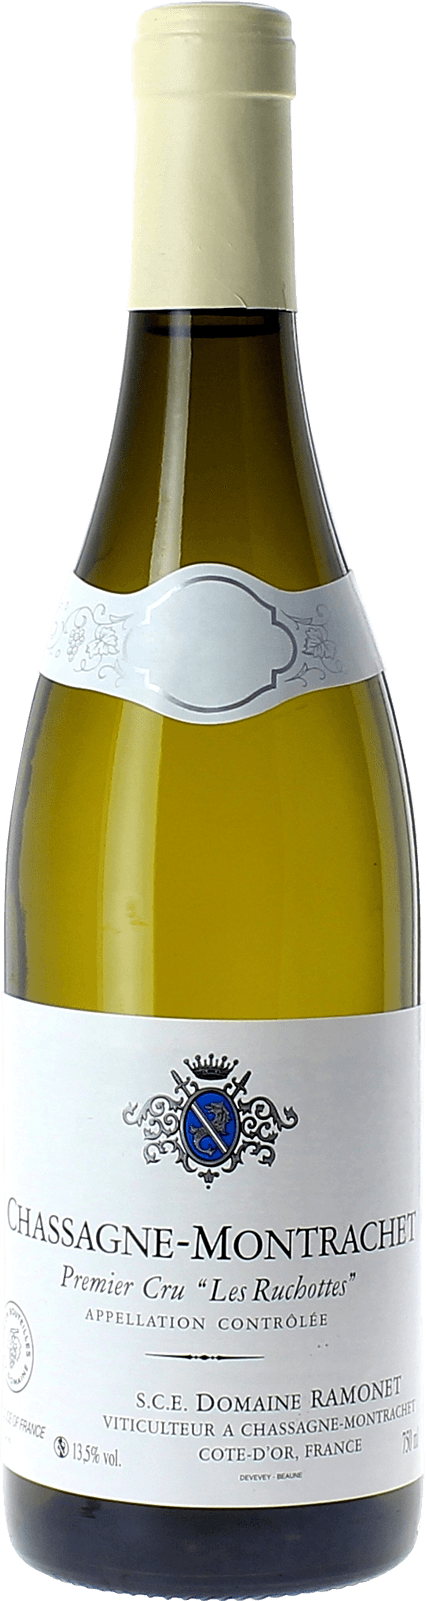 Chassagne montrachet 1er cru les ruchottes 2016 Domaine RAMONET, Bourgogne blanc